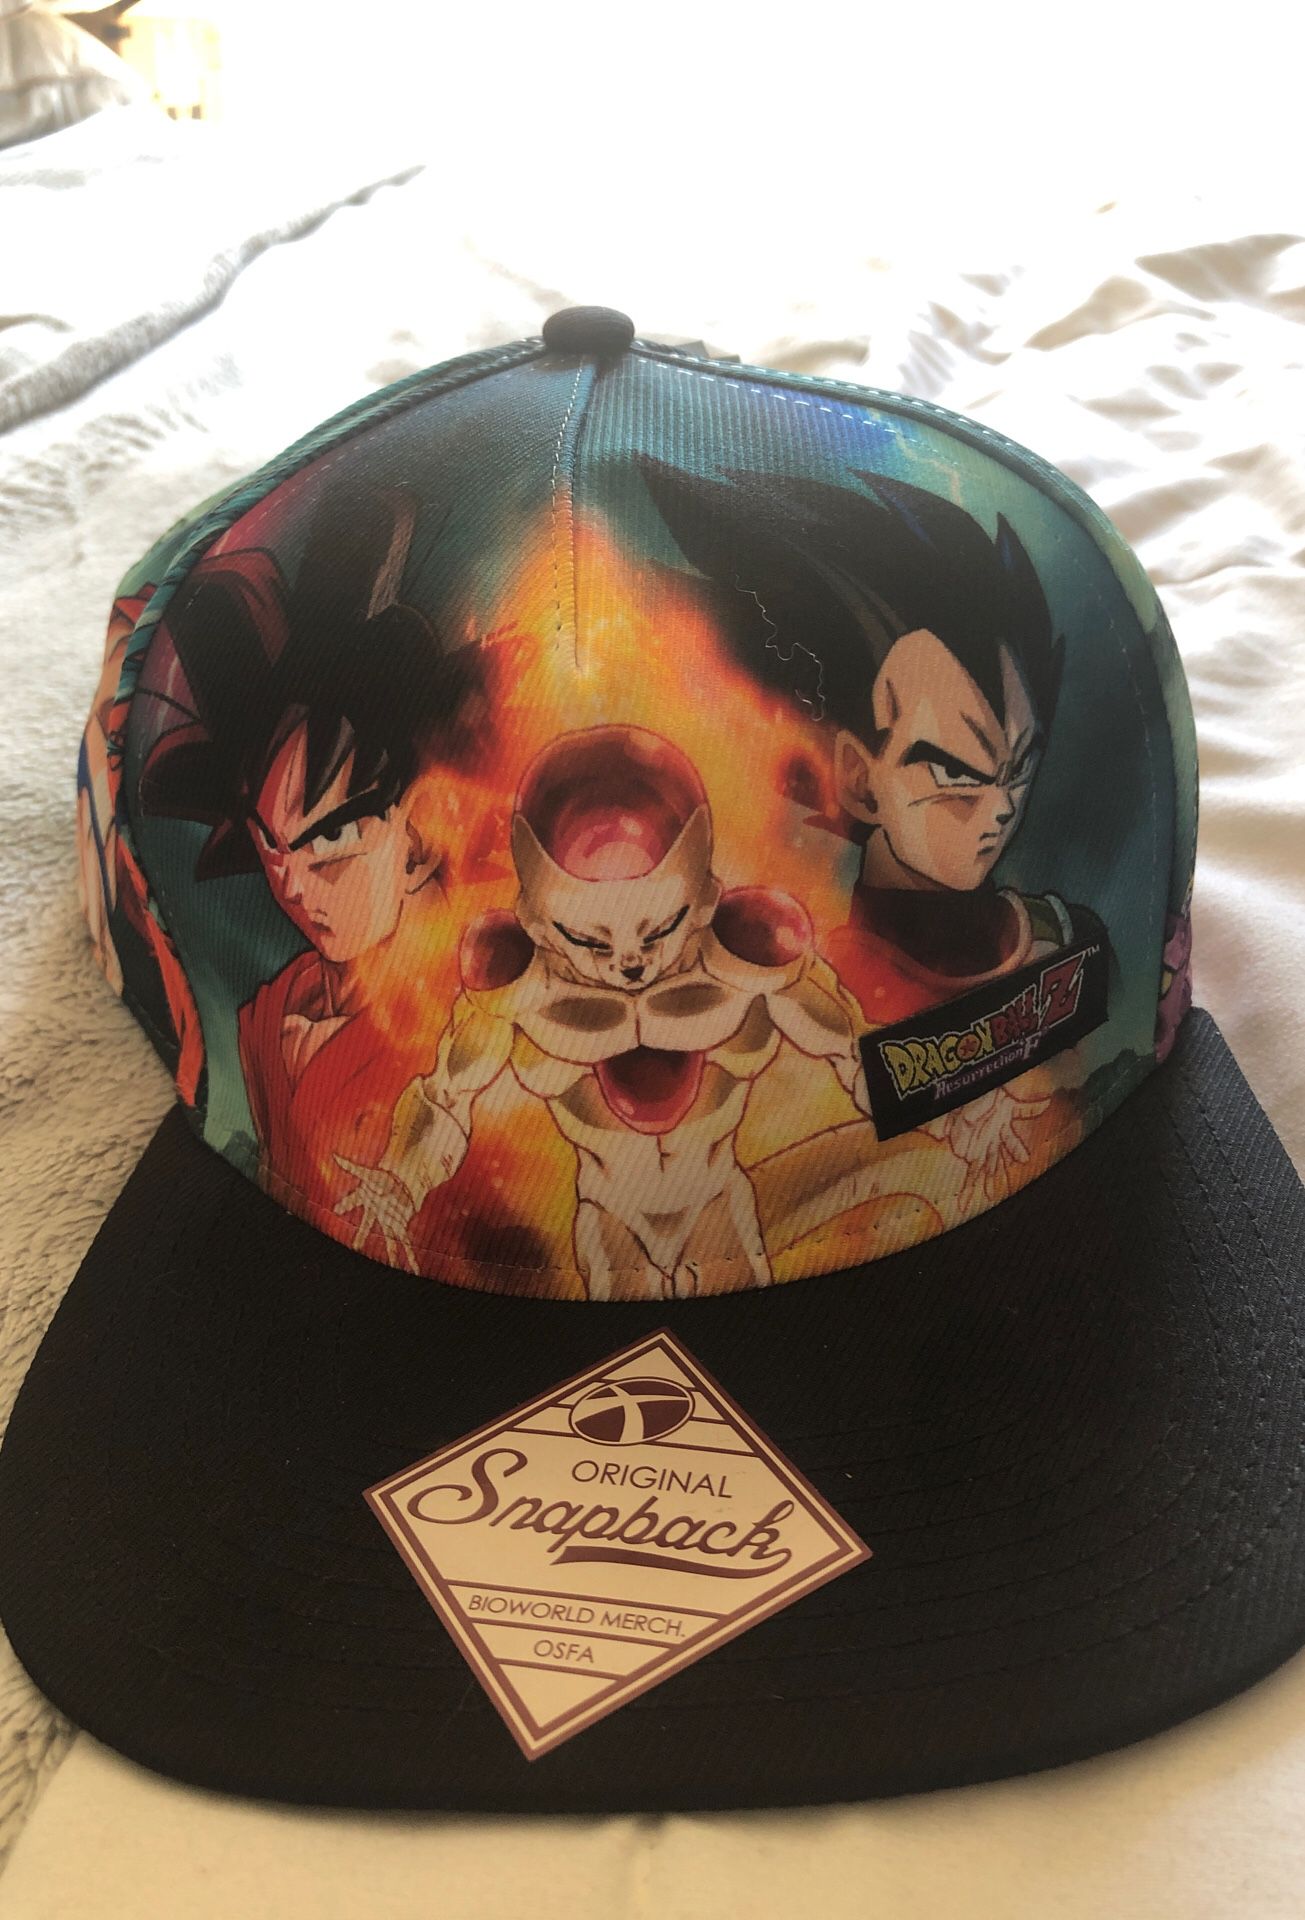 Dragonball Z SnapBack hat (DBZ) NEW